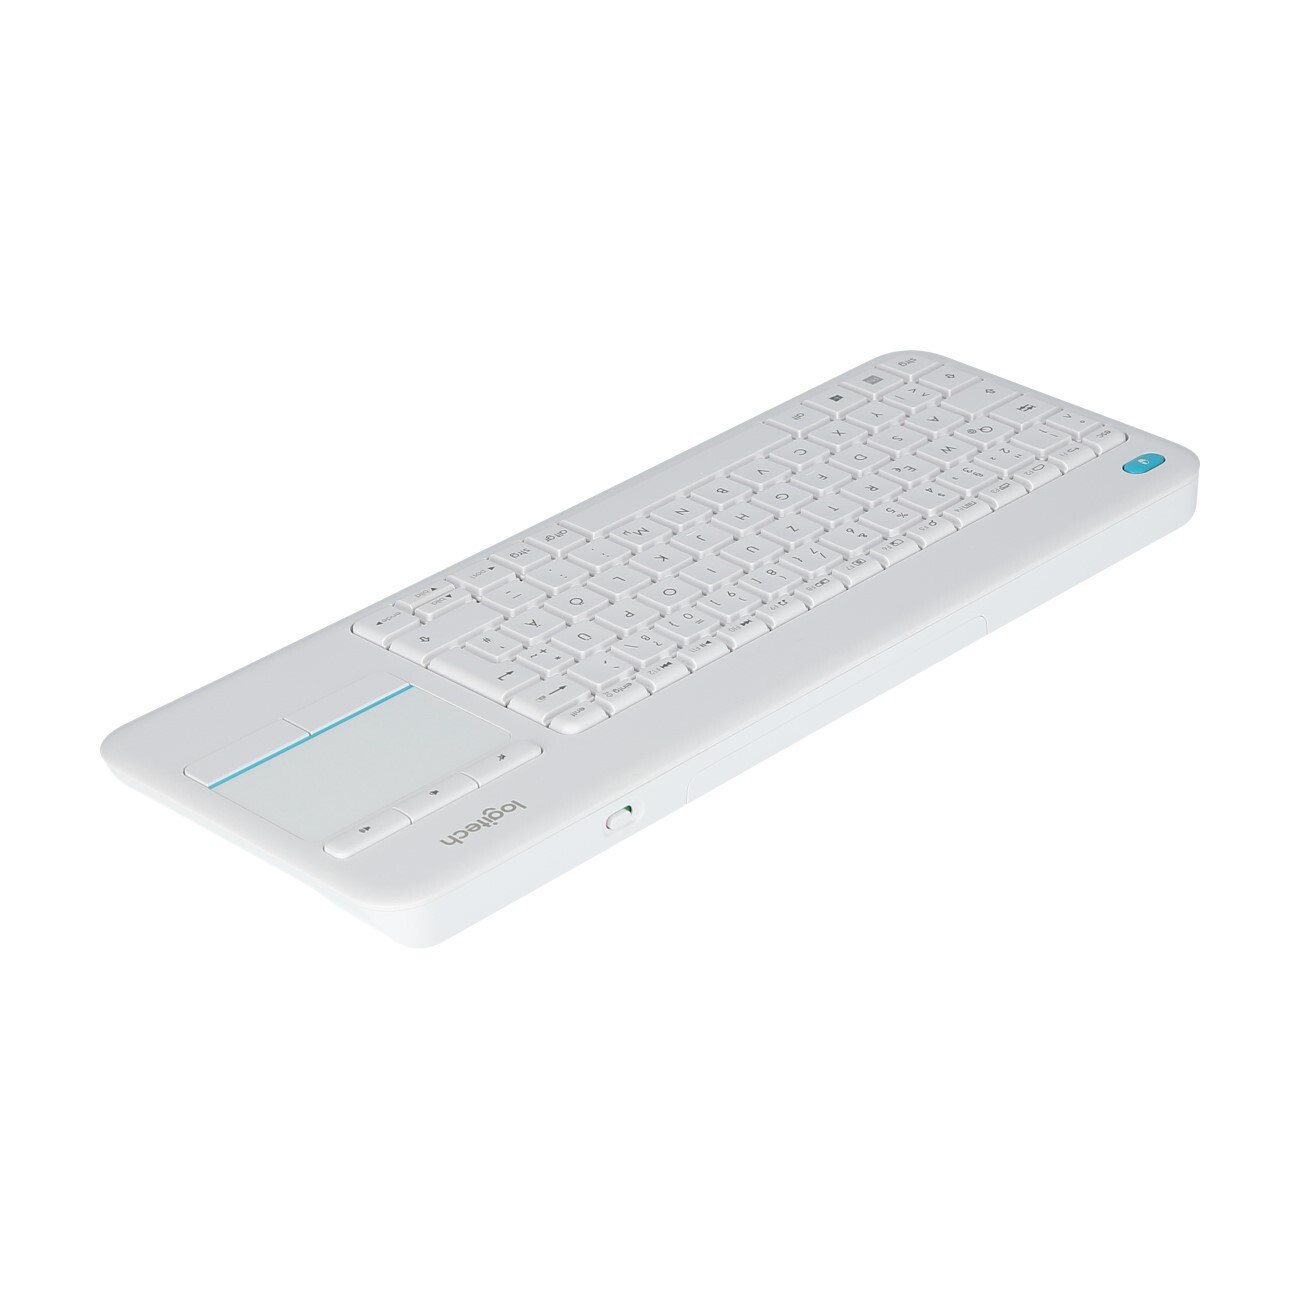 Logitech-K400-Plus-Tastatur-kabellos-weiss